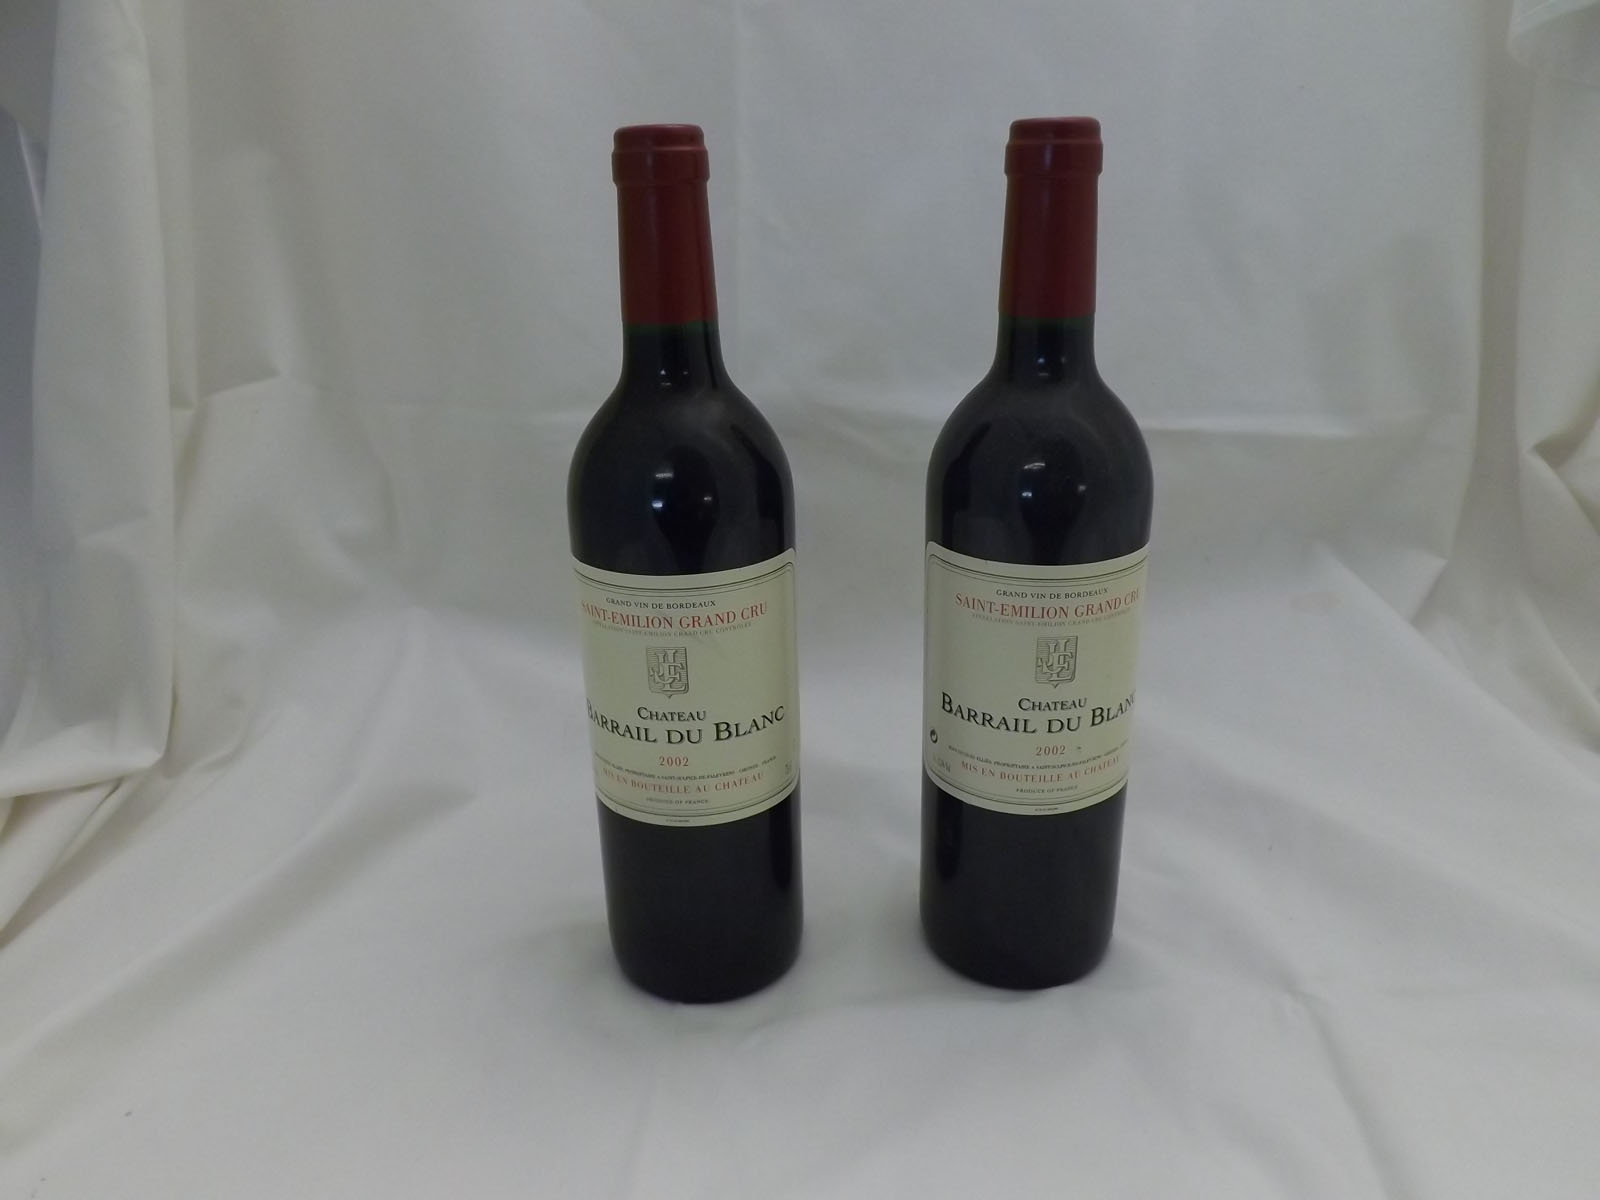 Twelve bottles of Chateau Barrail du Blanc, St Emilion Grand Cru 2002